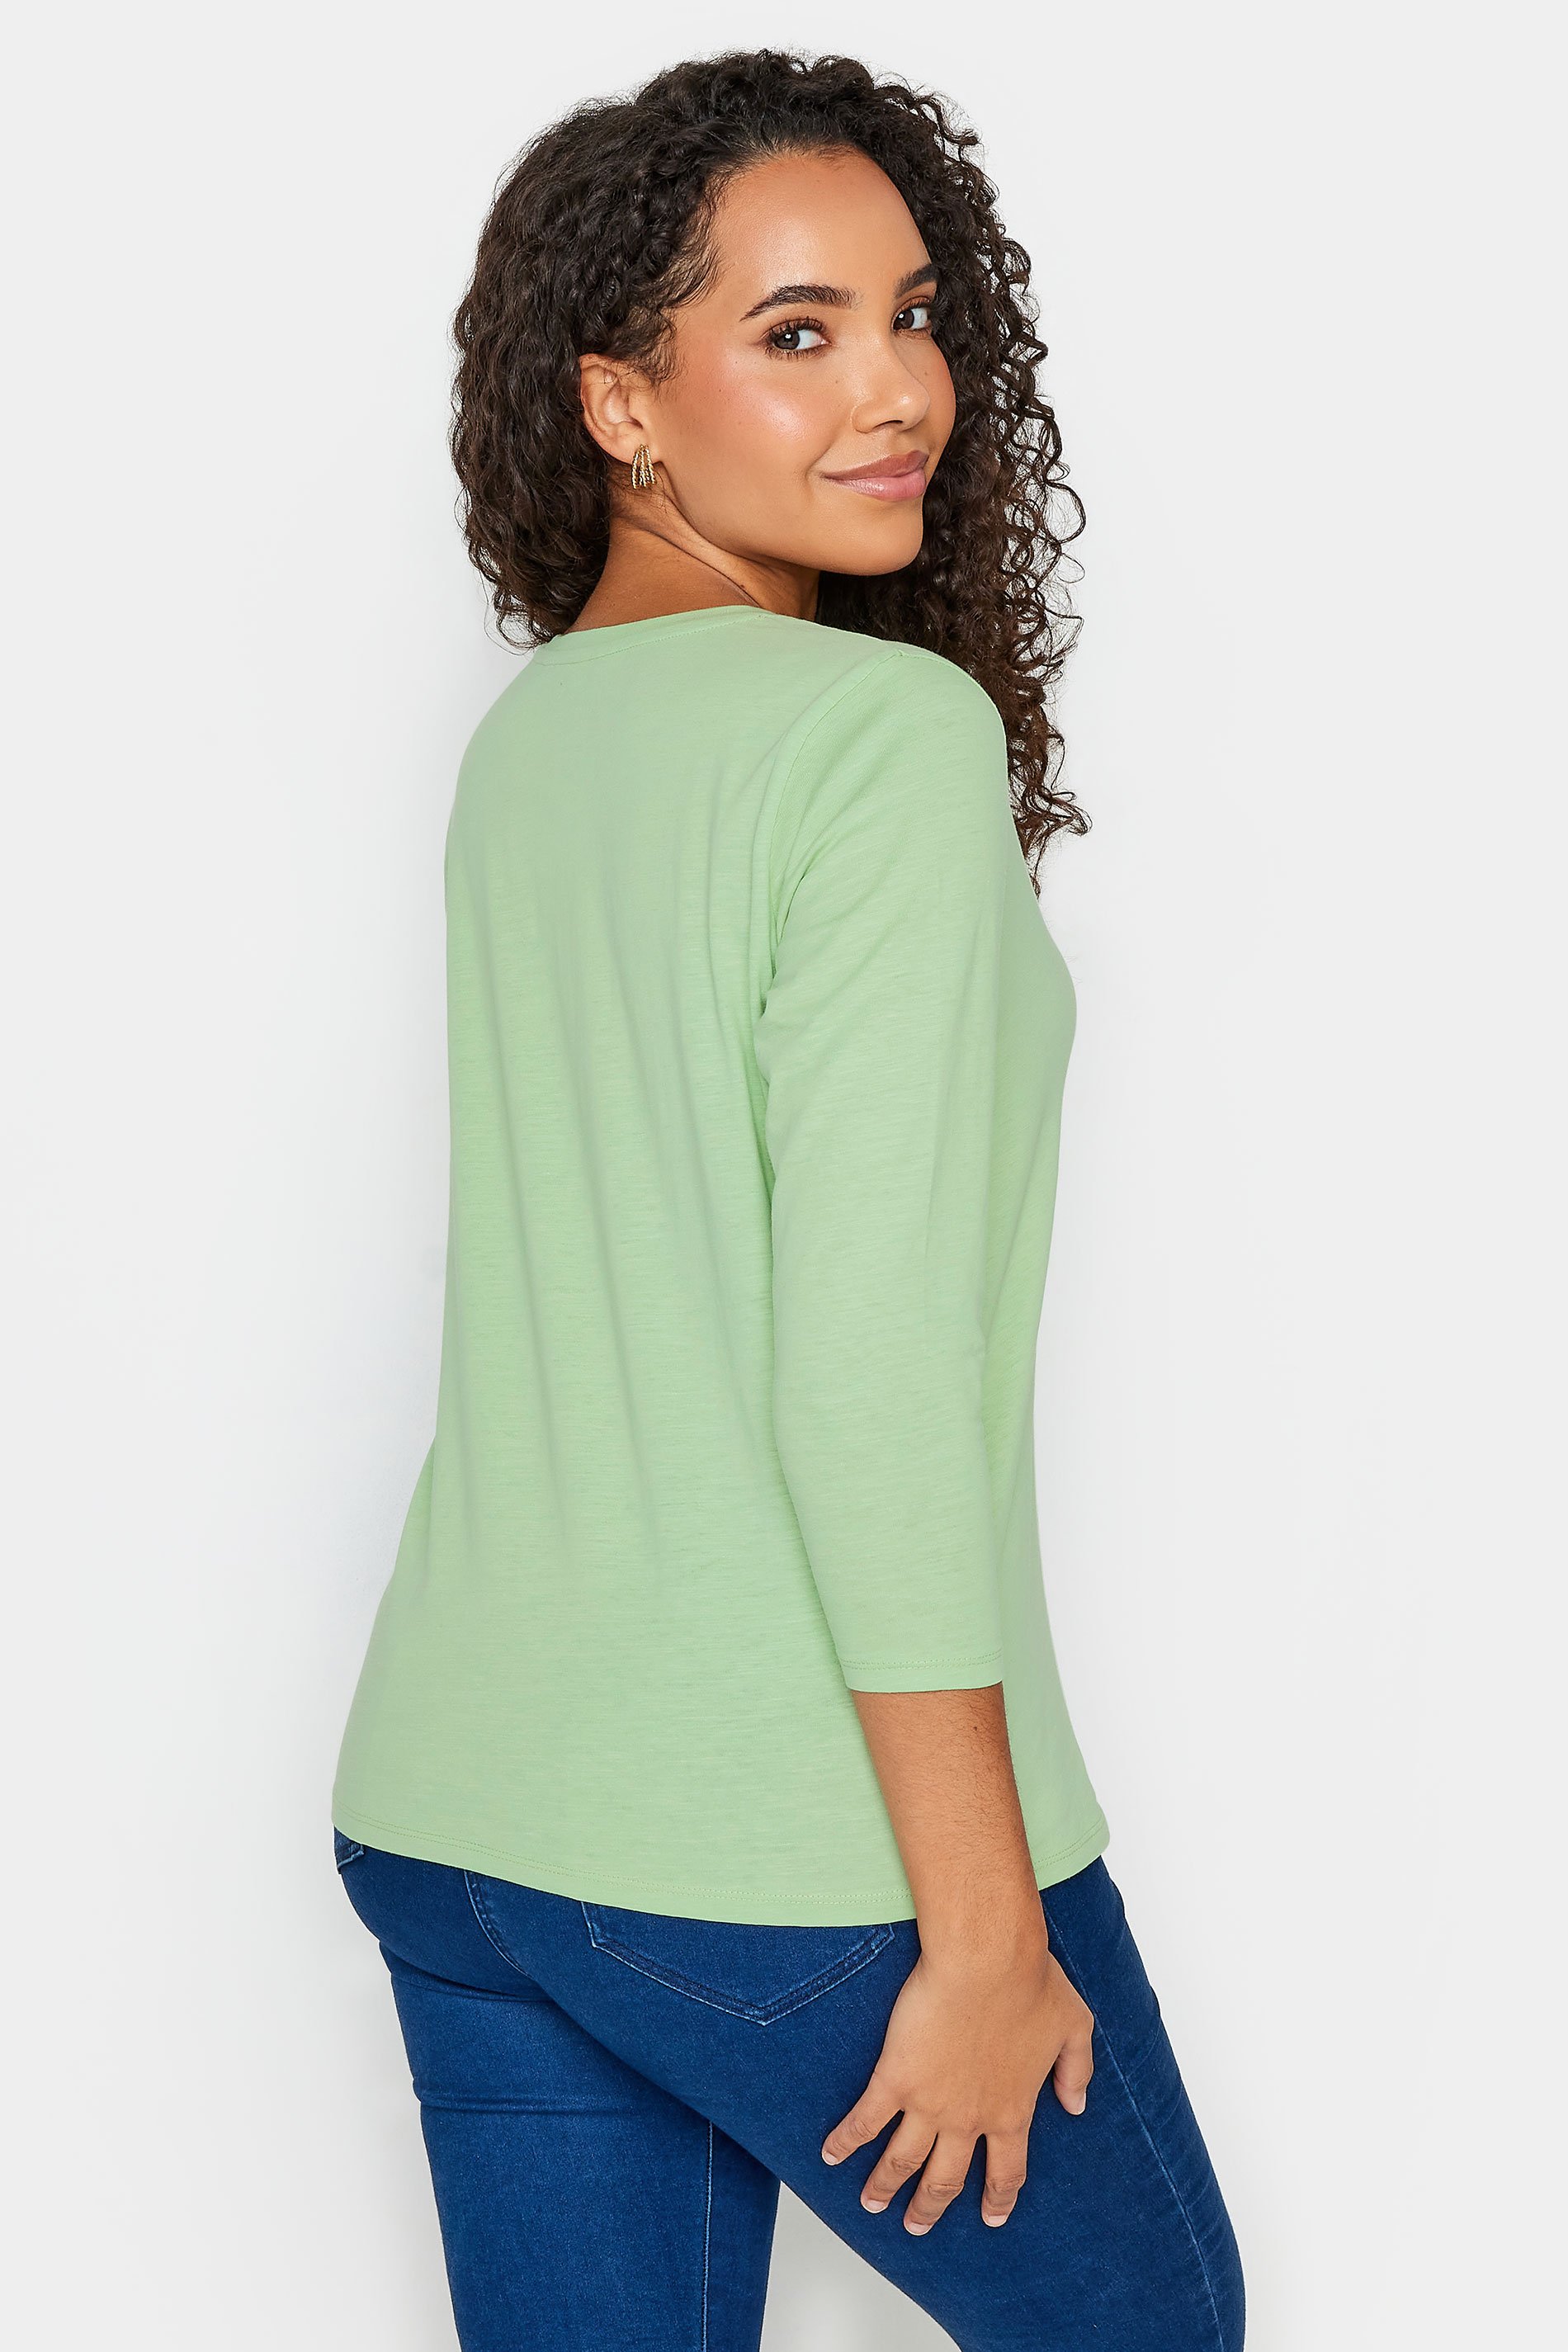 M&Co Green V-Neck Cotton T-Shirt | M&Co